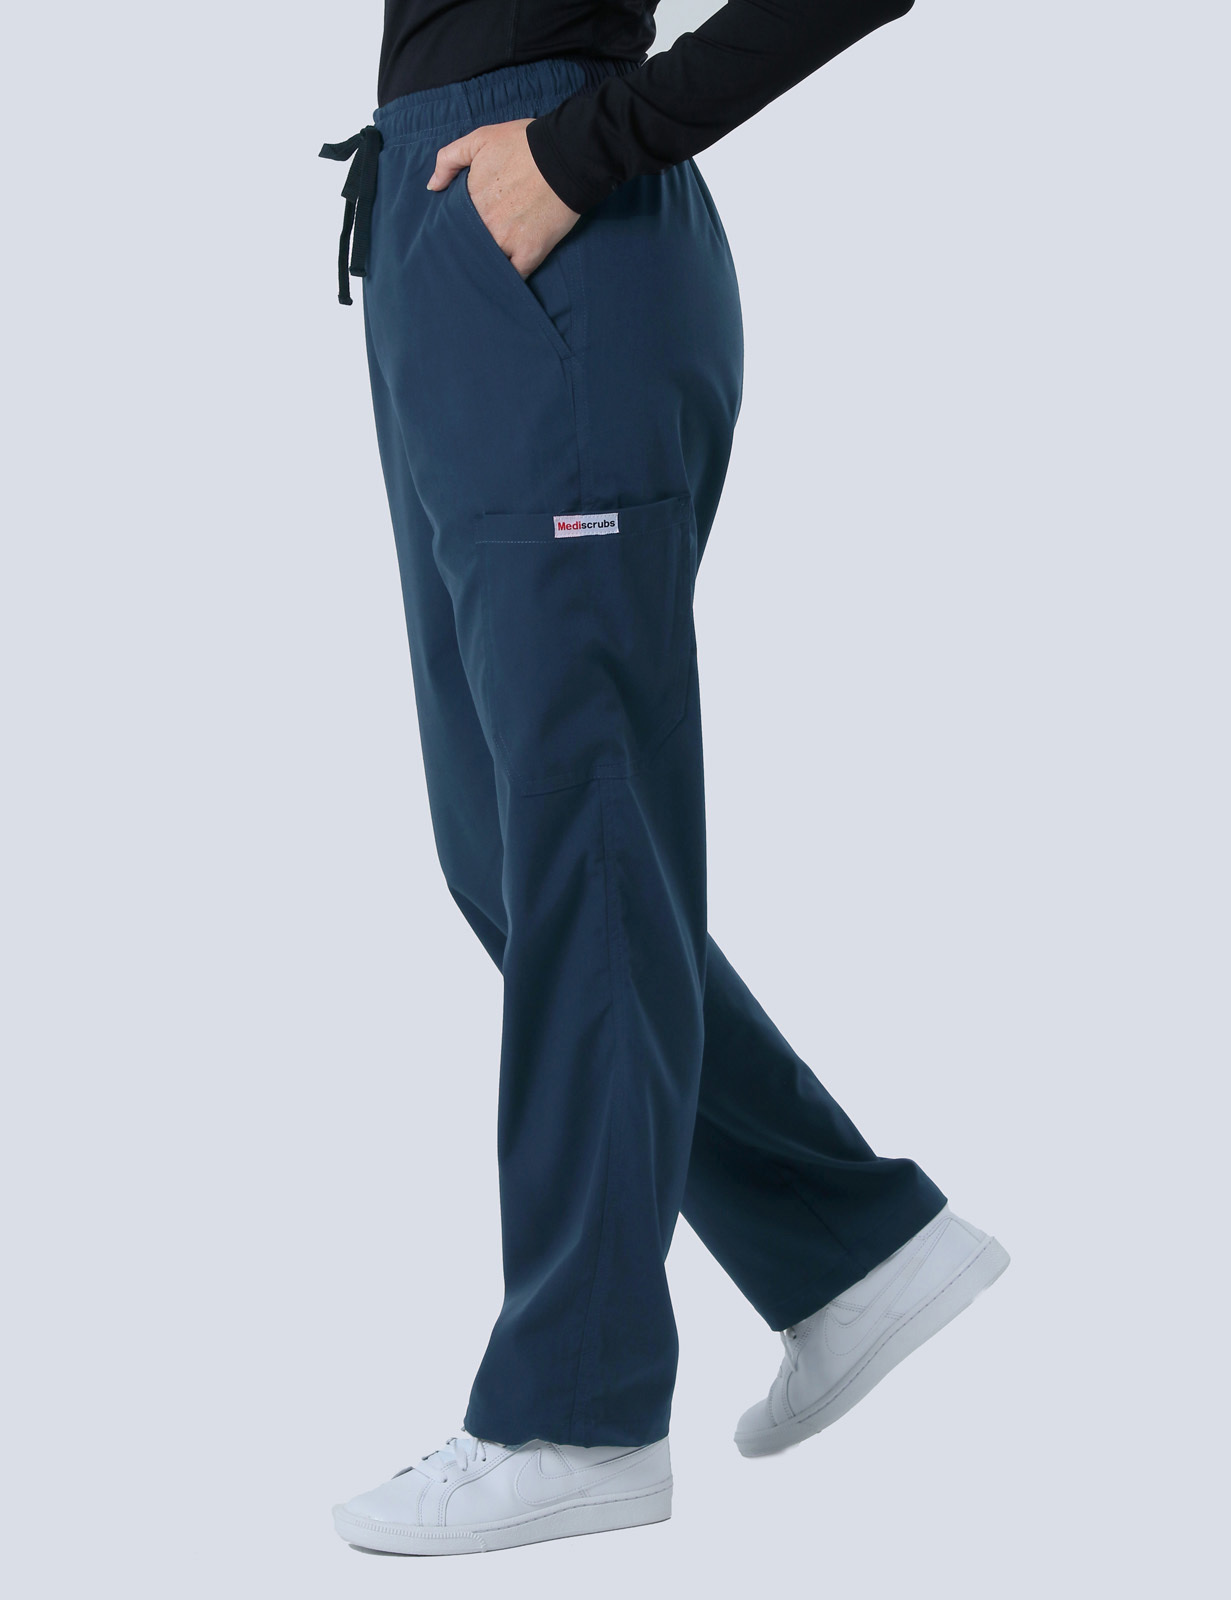 Weipa Hospital - ED AIN (4 Pocket Scrub Top and Cargo Pants in Navy incl Logos)